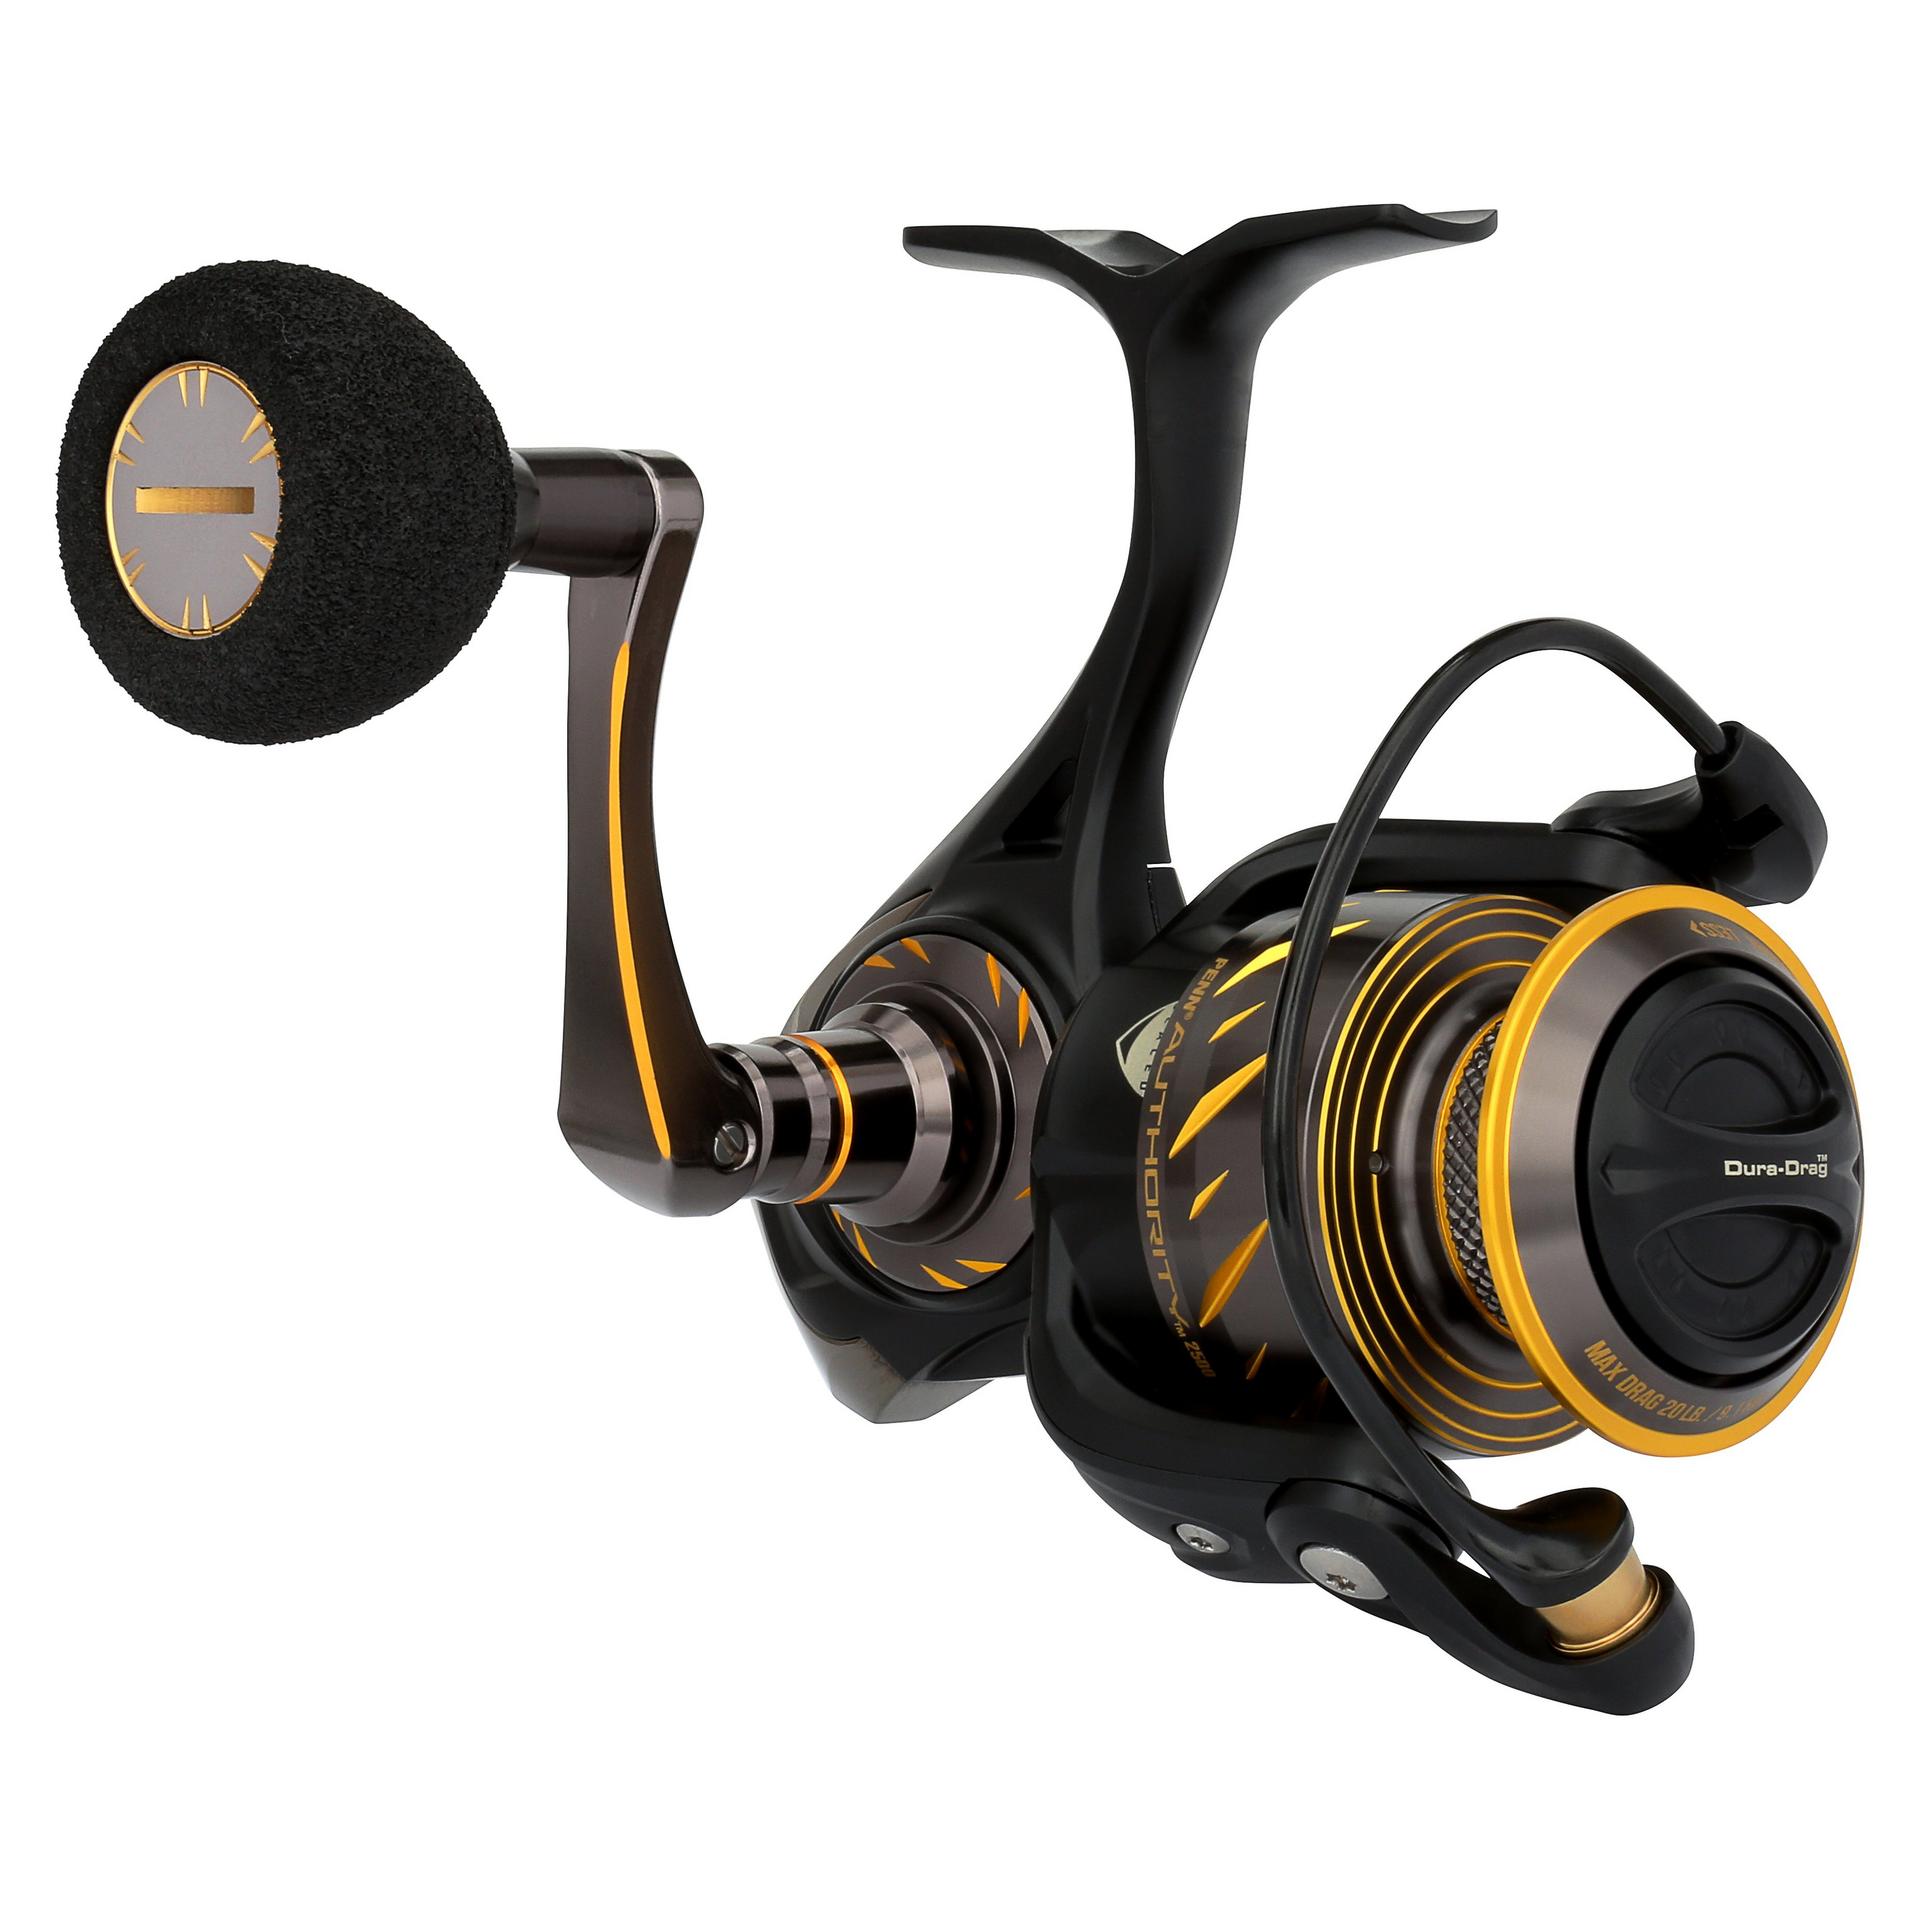 Penn Battle III 6000 Spinning Fishing Reel - Black/Gold for sale online